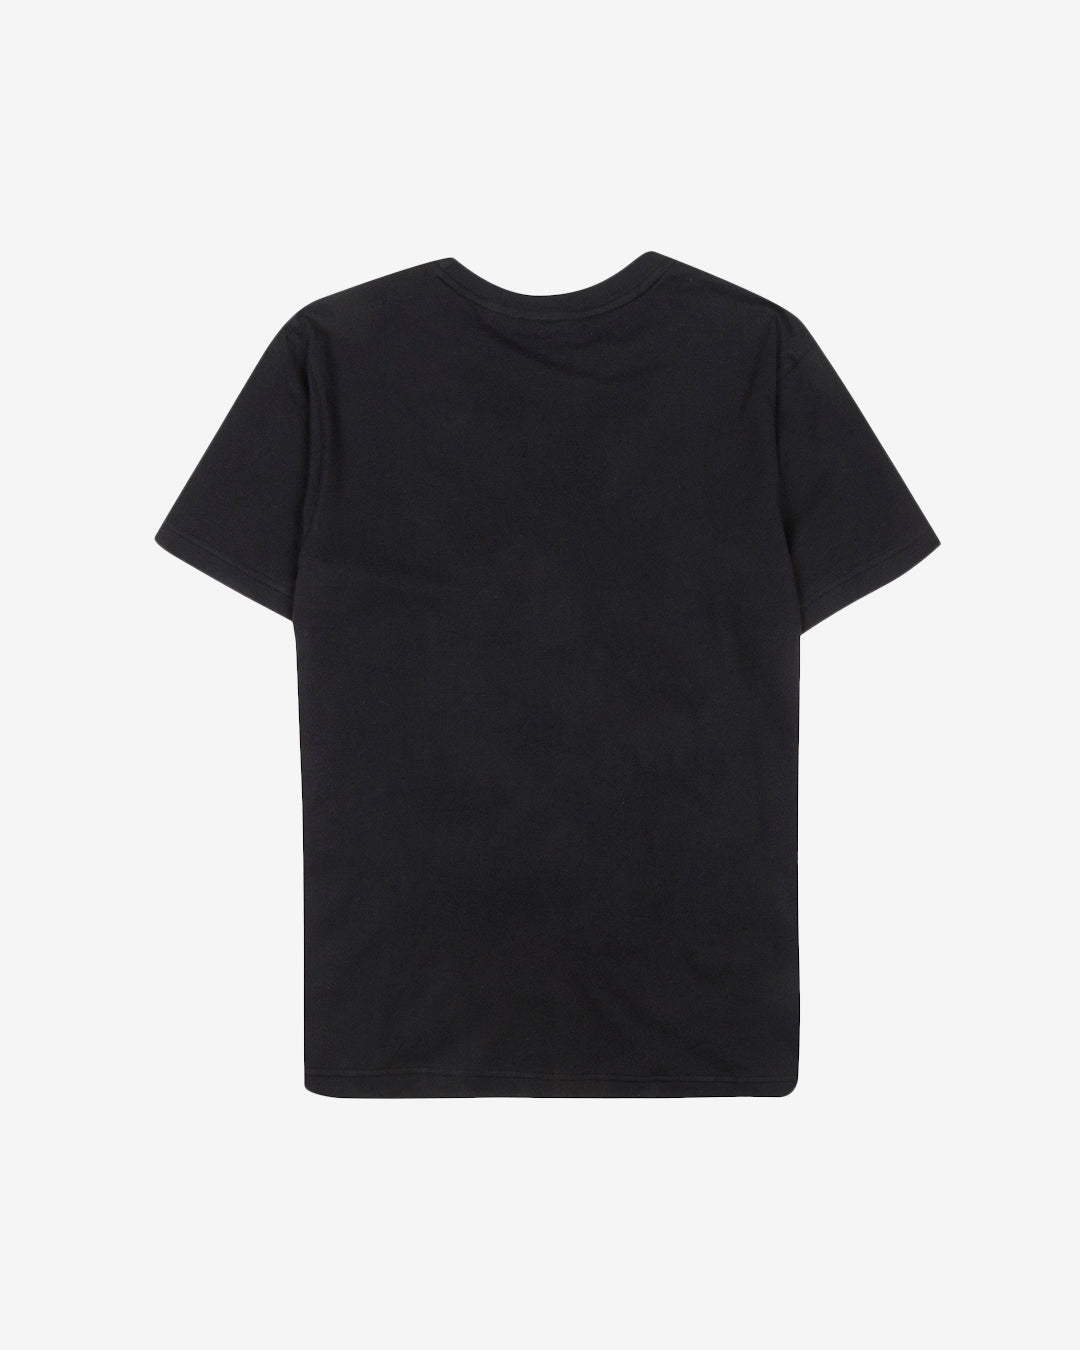 PFC: 002-1 - Women's T-Shirt - Onyx Black